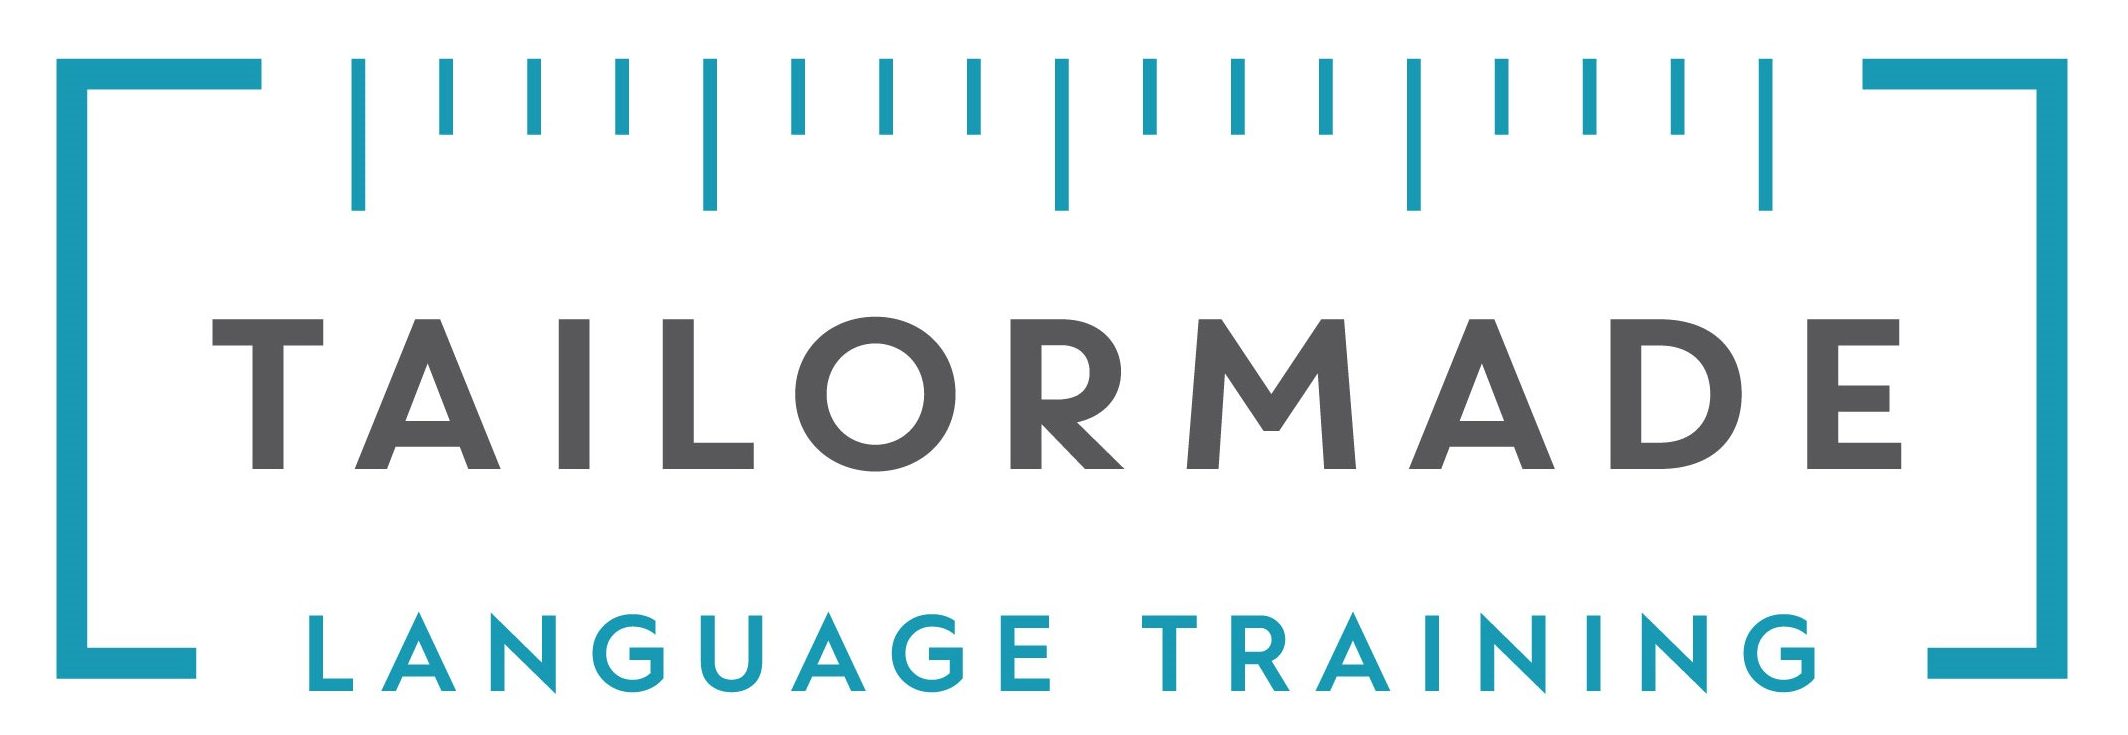 TailorMade Language Training